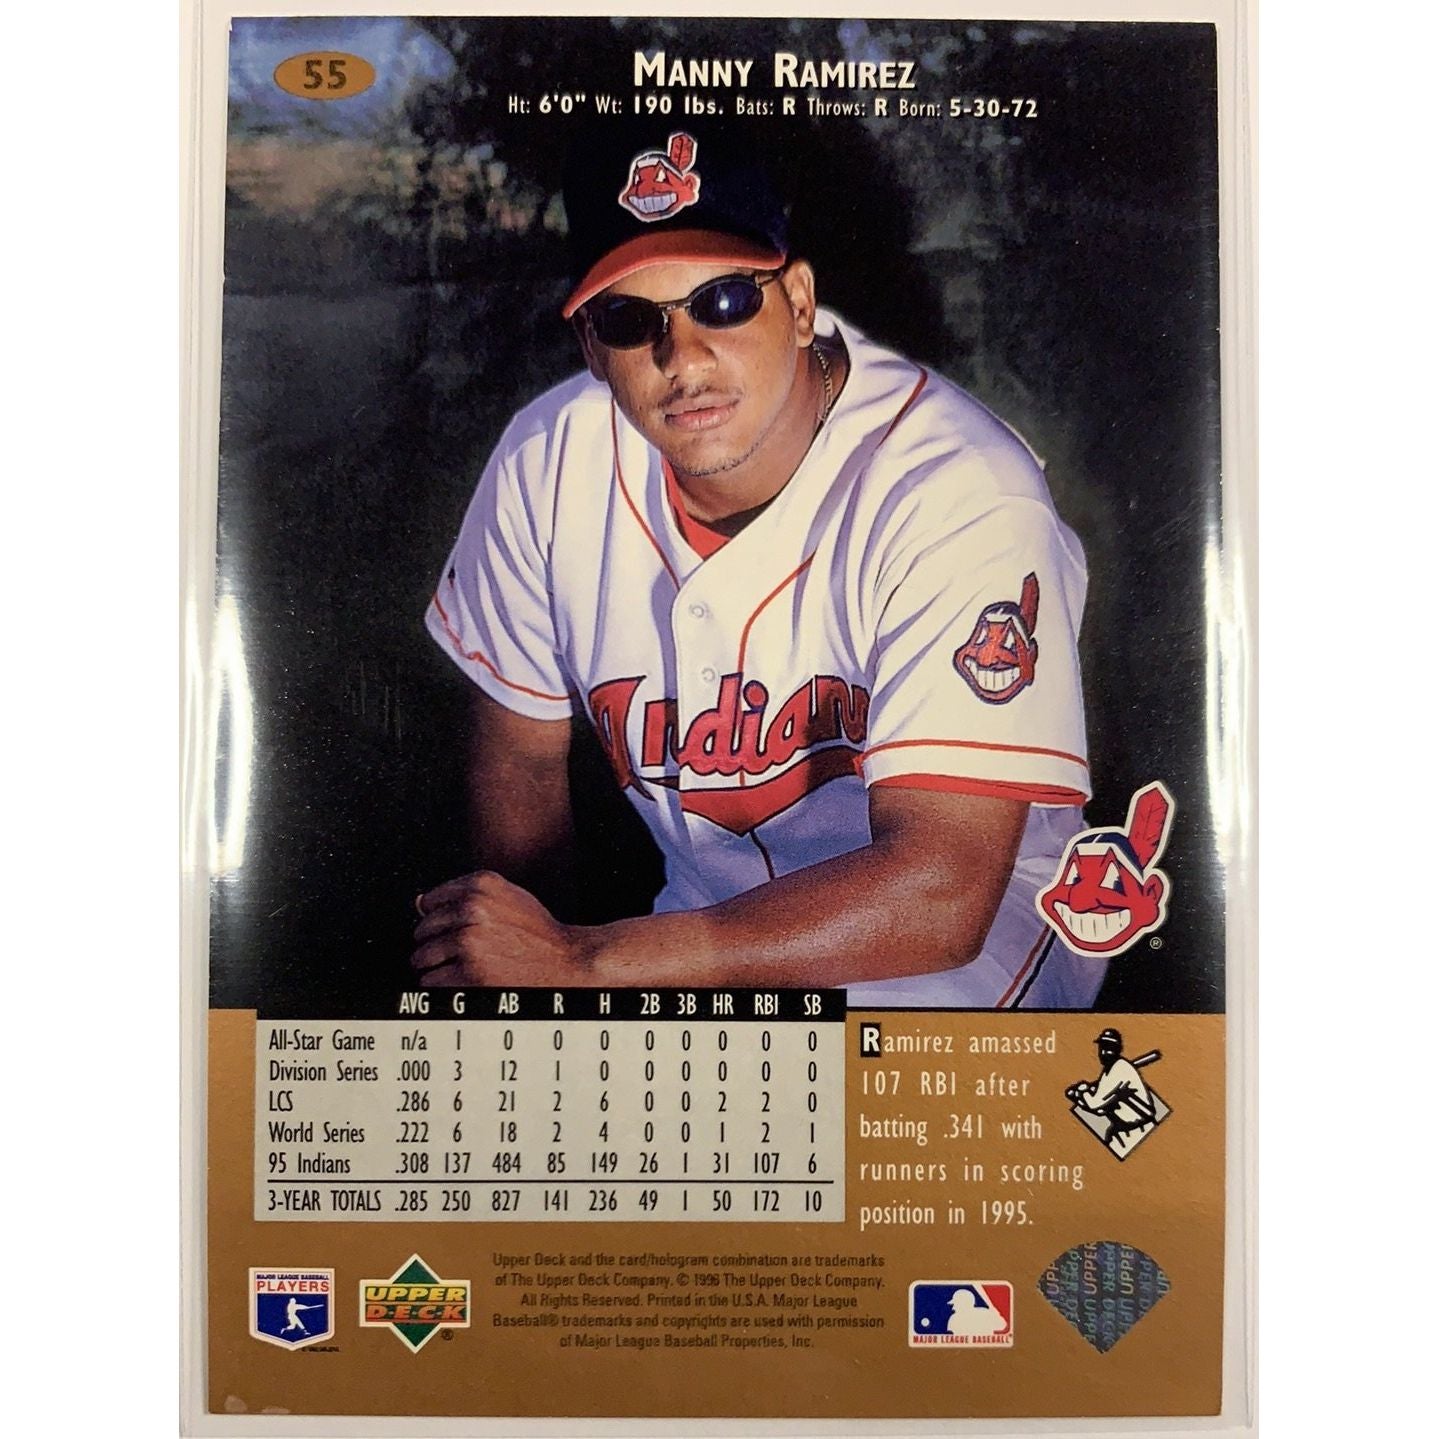  1996 Upper Deck Manny Ramirez Base #55  Local Legends Cards & Collectibles